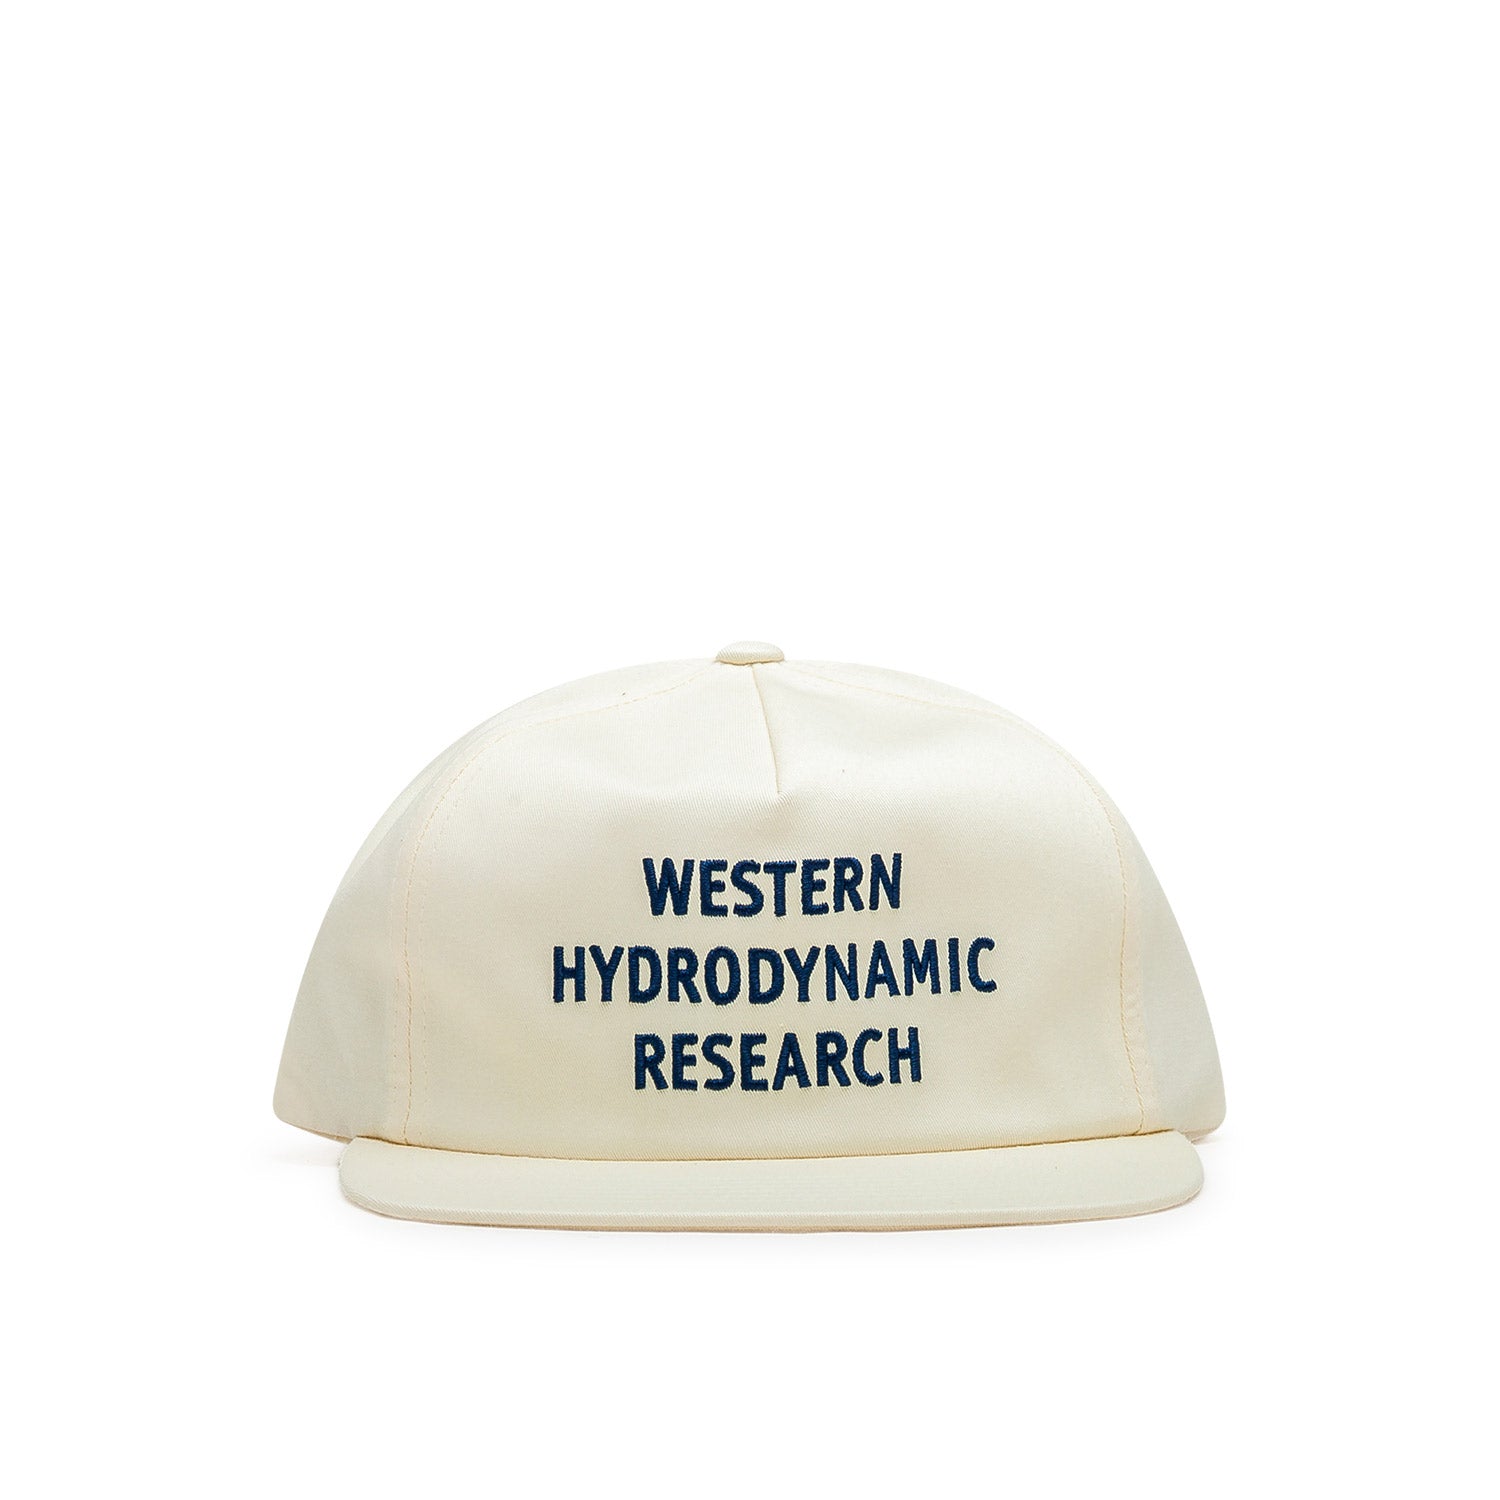 Western Hydrodynamic Research Promotional Hat (Weiß)  - Allike Store